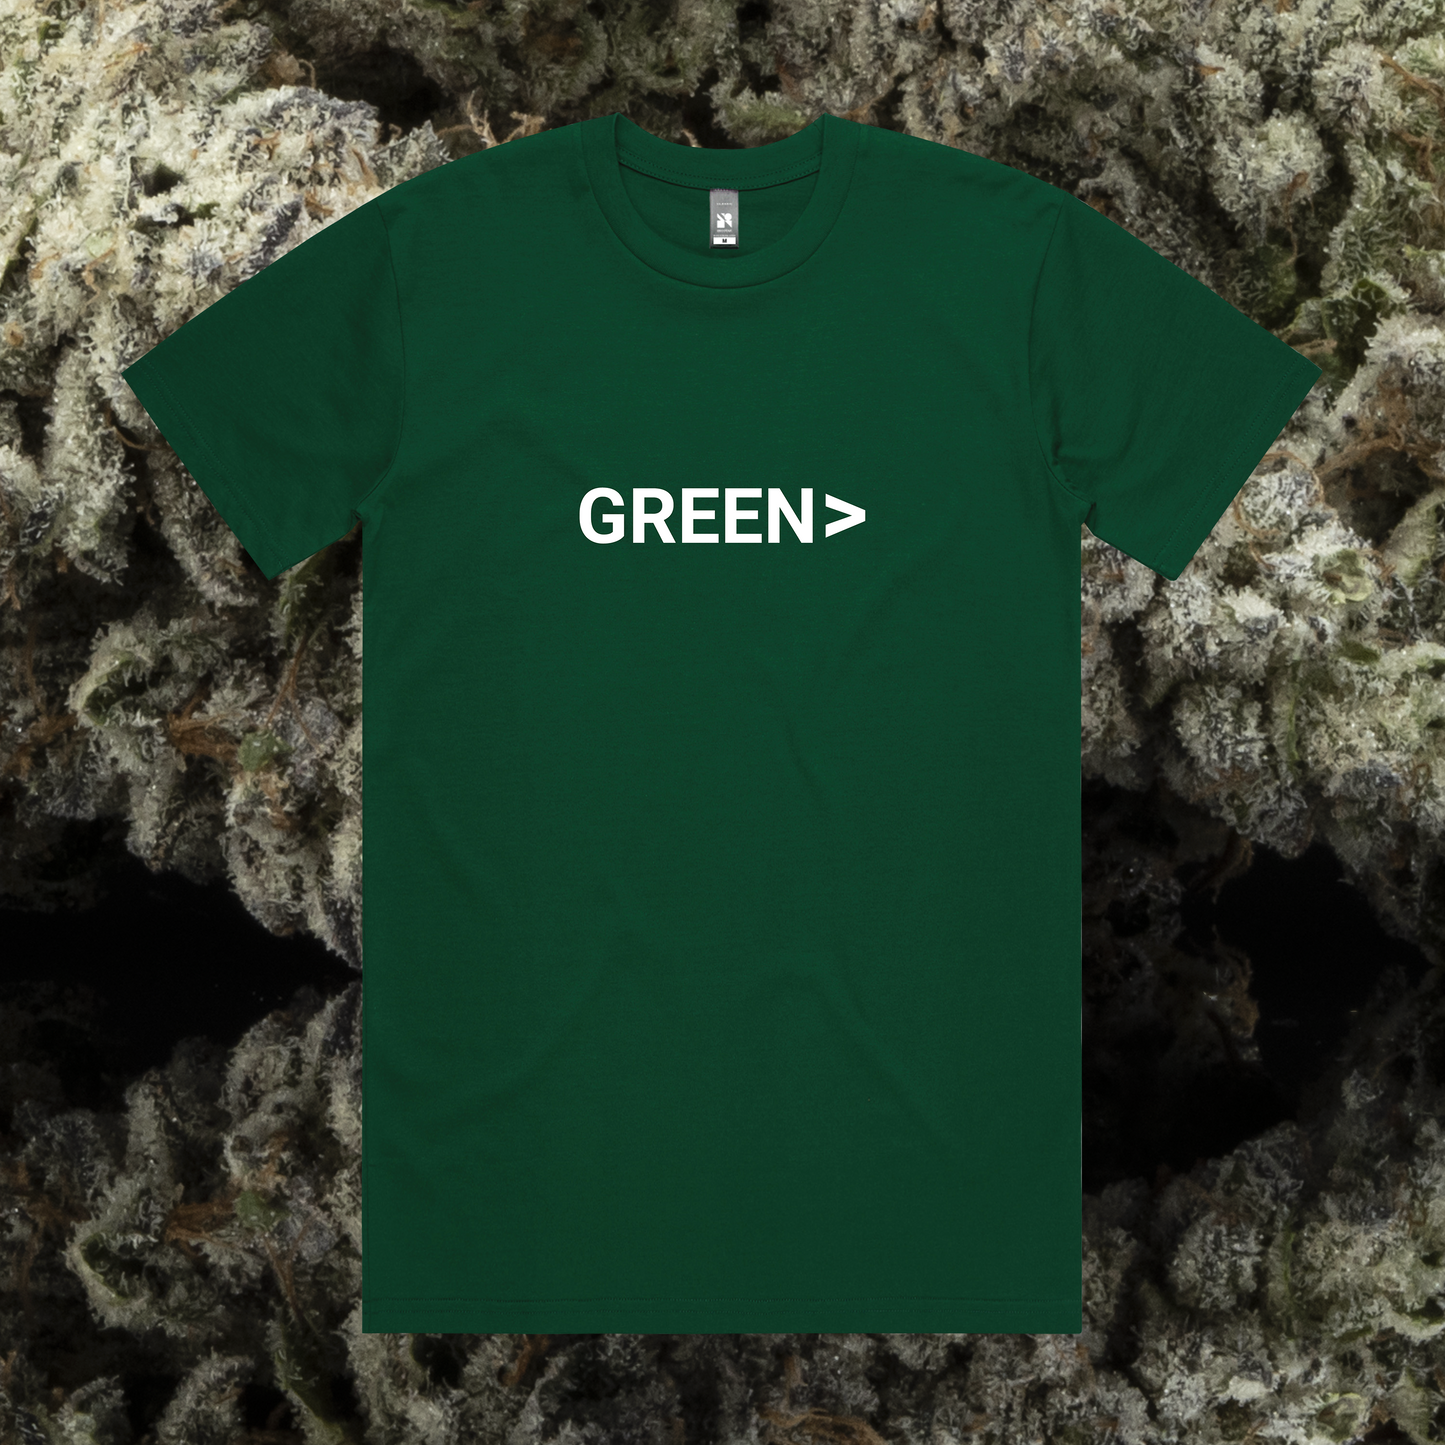 GREEN>